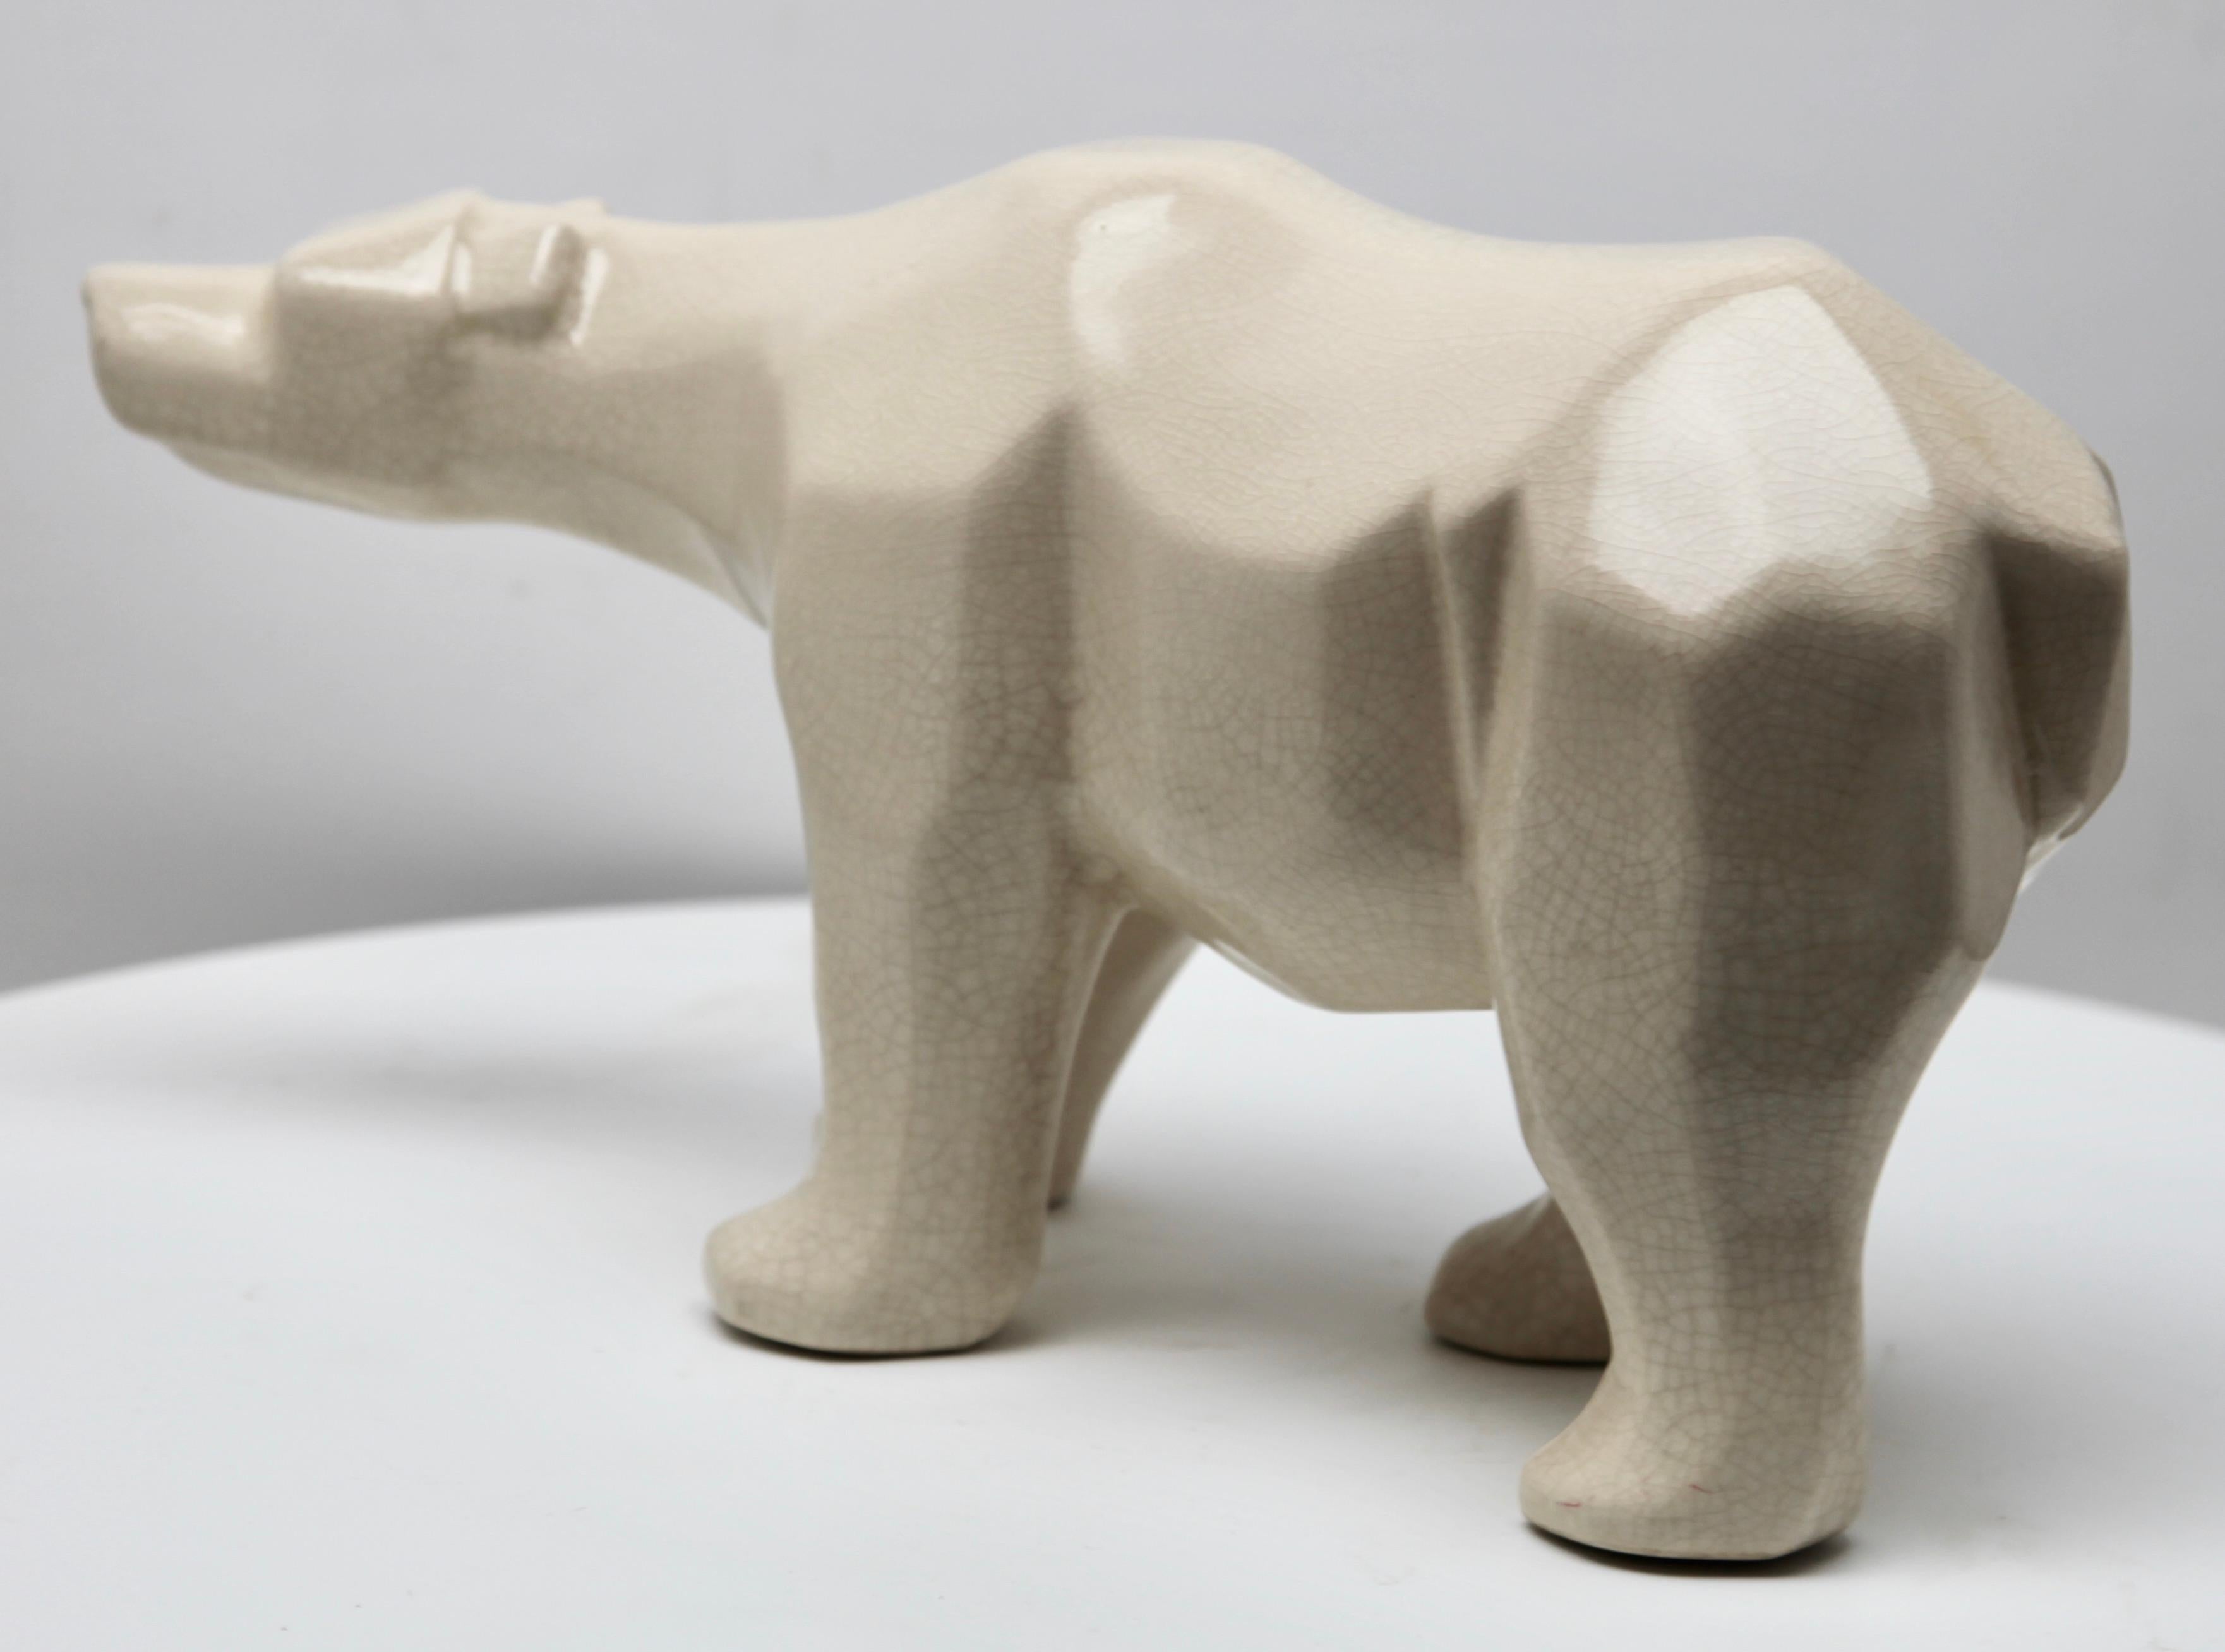 French Cubist Style Polar Bear Whit a Crackle Glaze Ceramic Finish, Stamp L&V Ceram For Sale